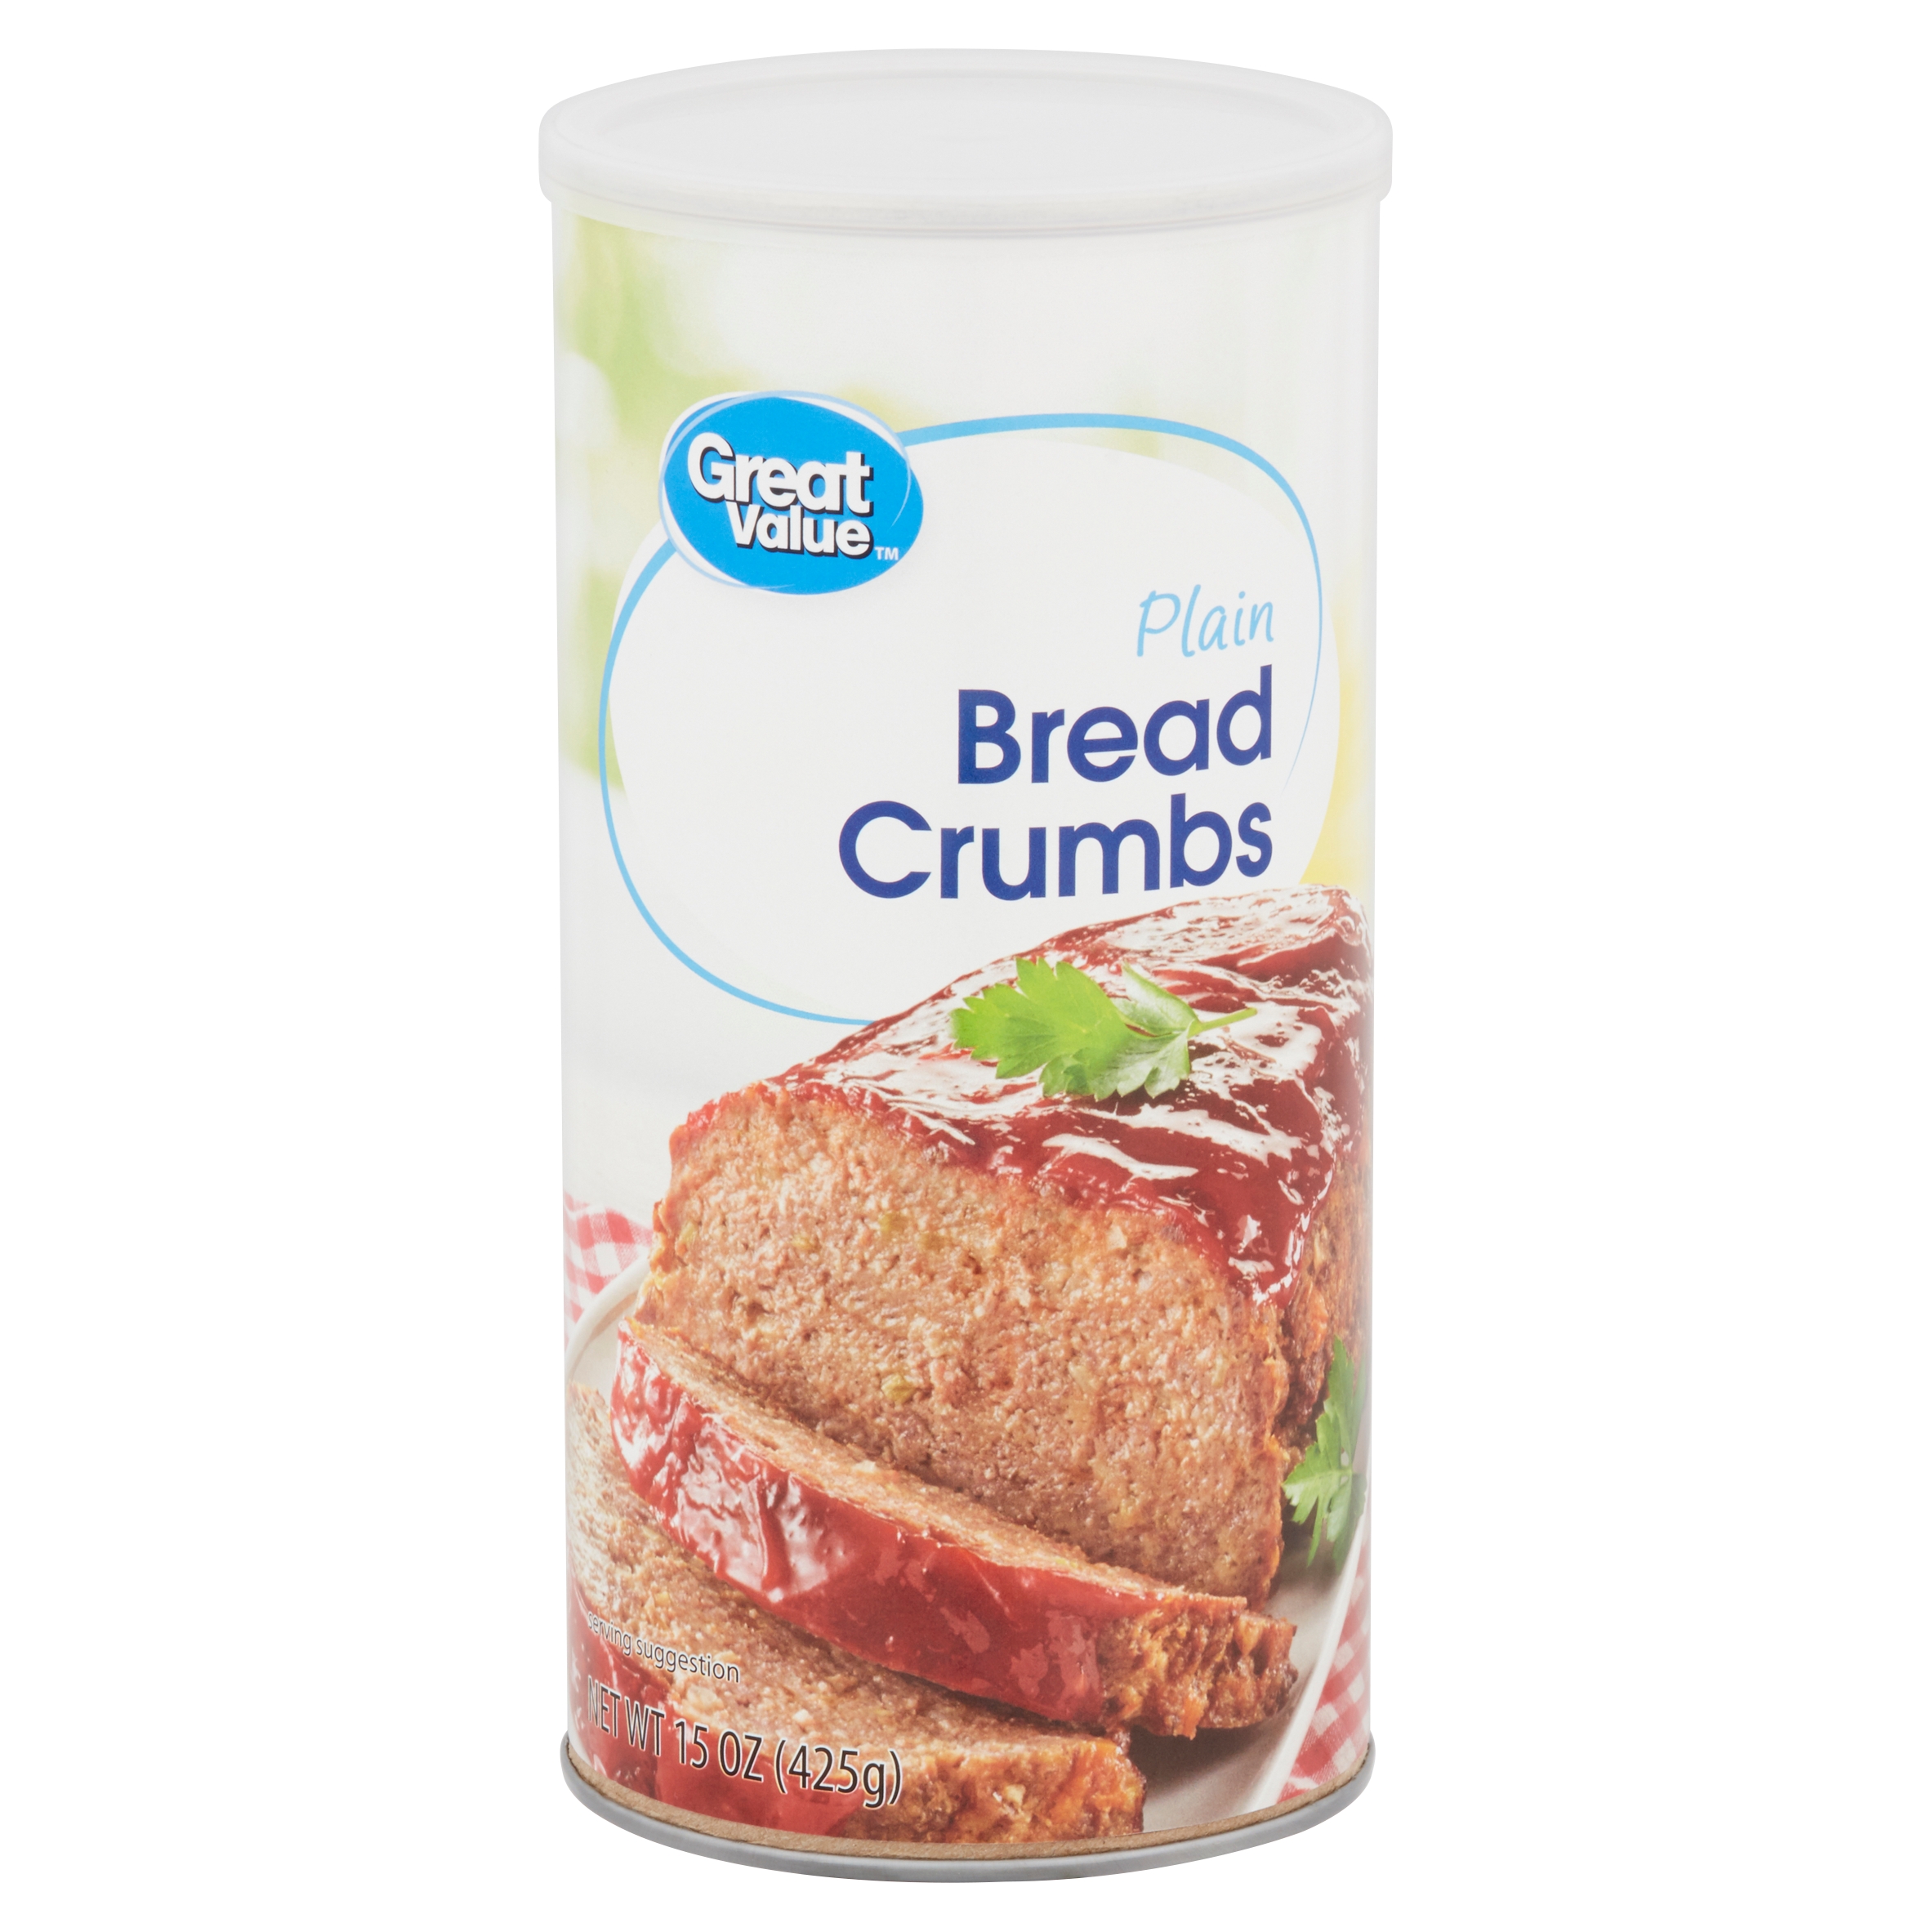 Great Value Plain Bread Crumbs, 15 Oz Image